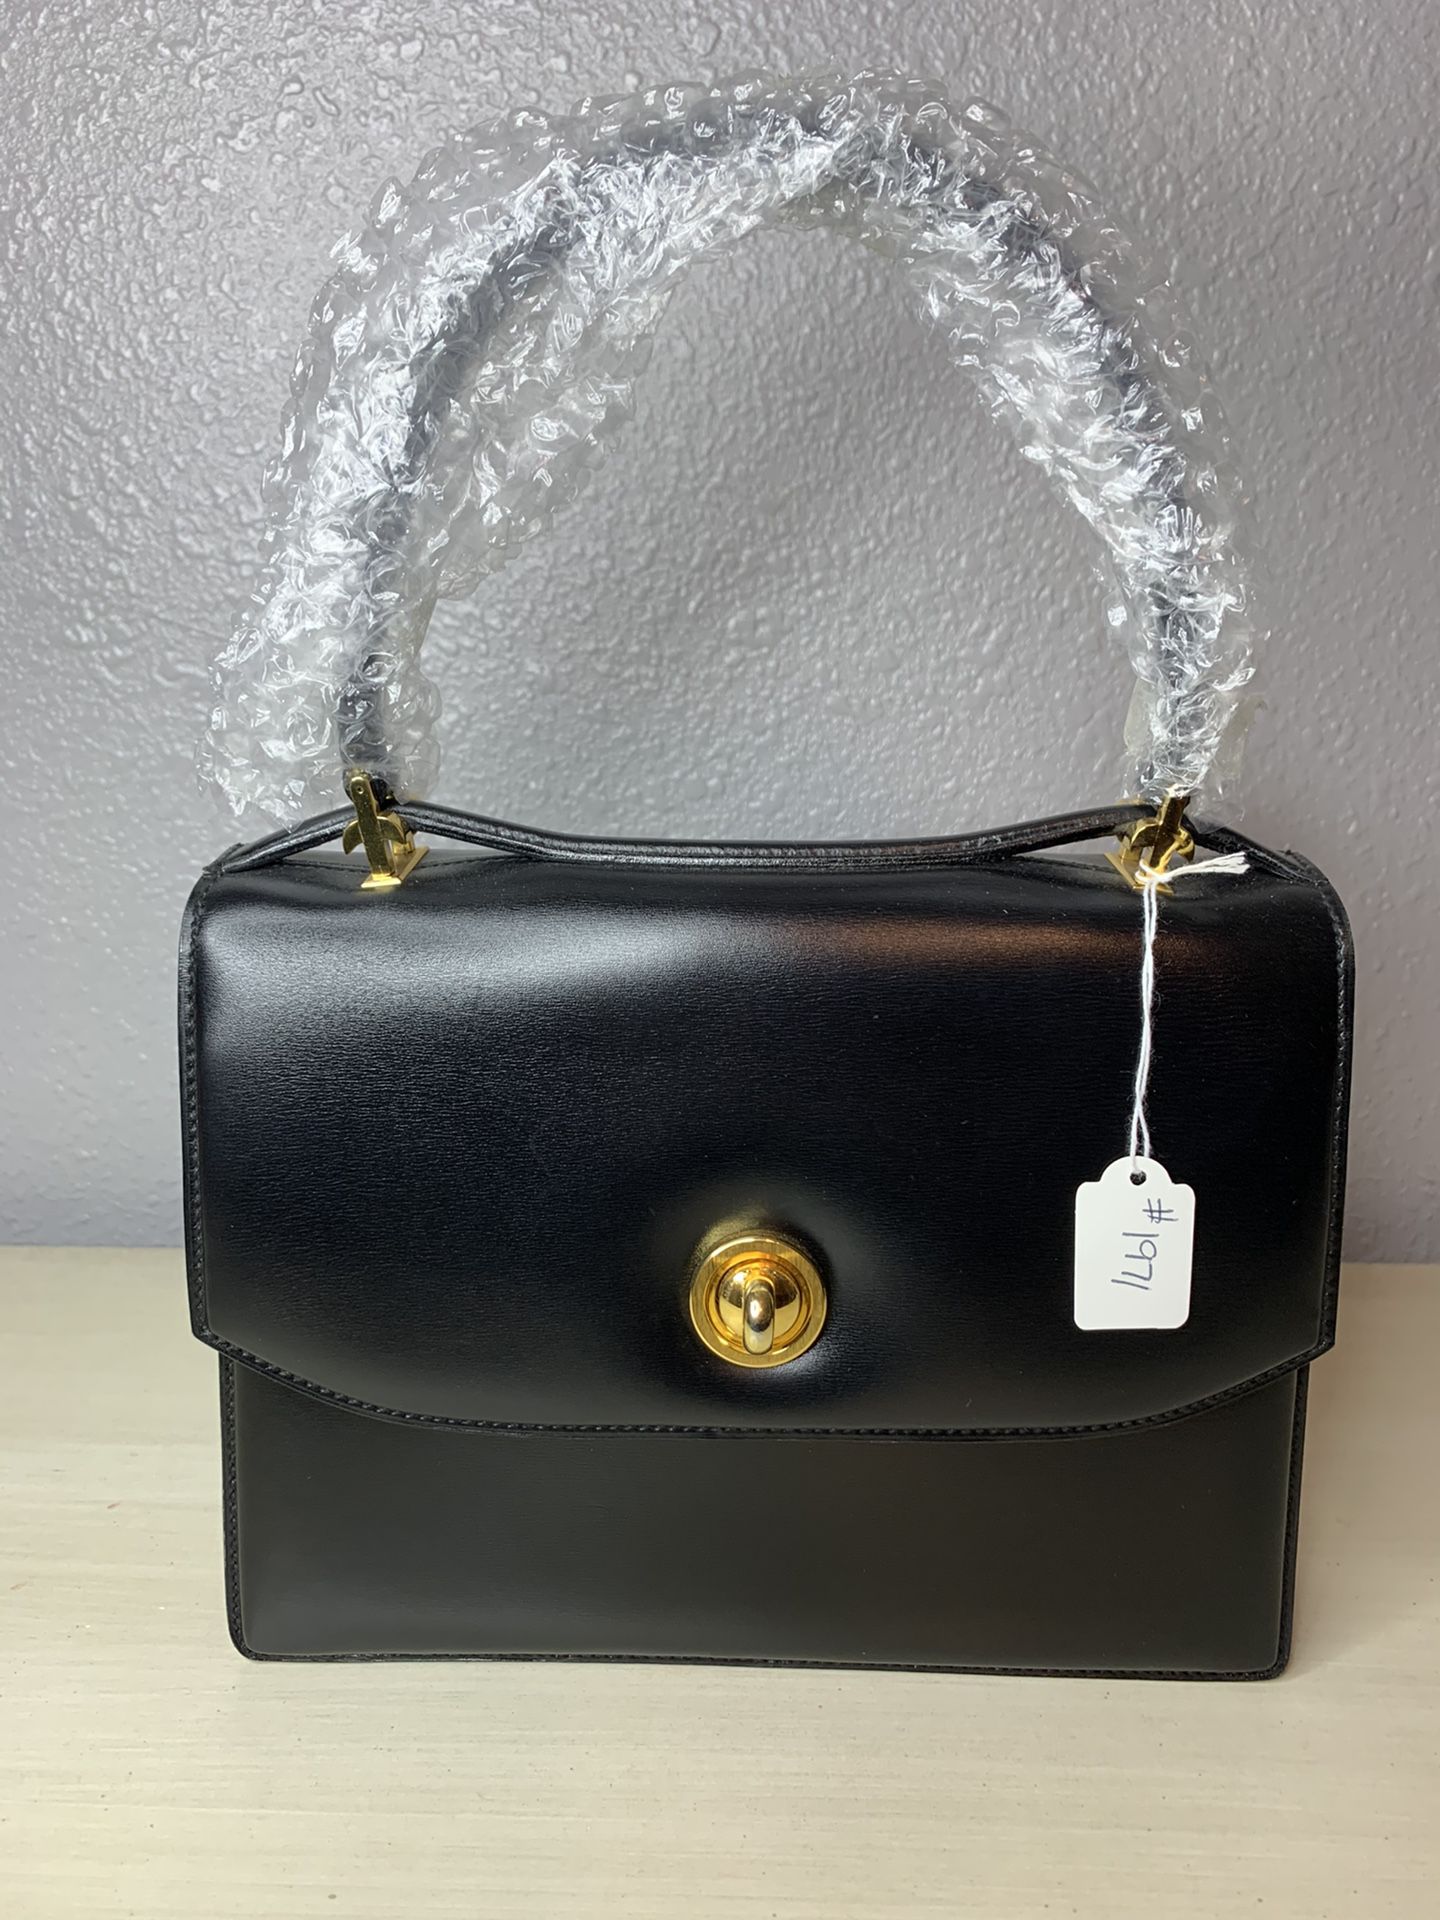 Gucci handbag purse